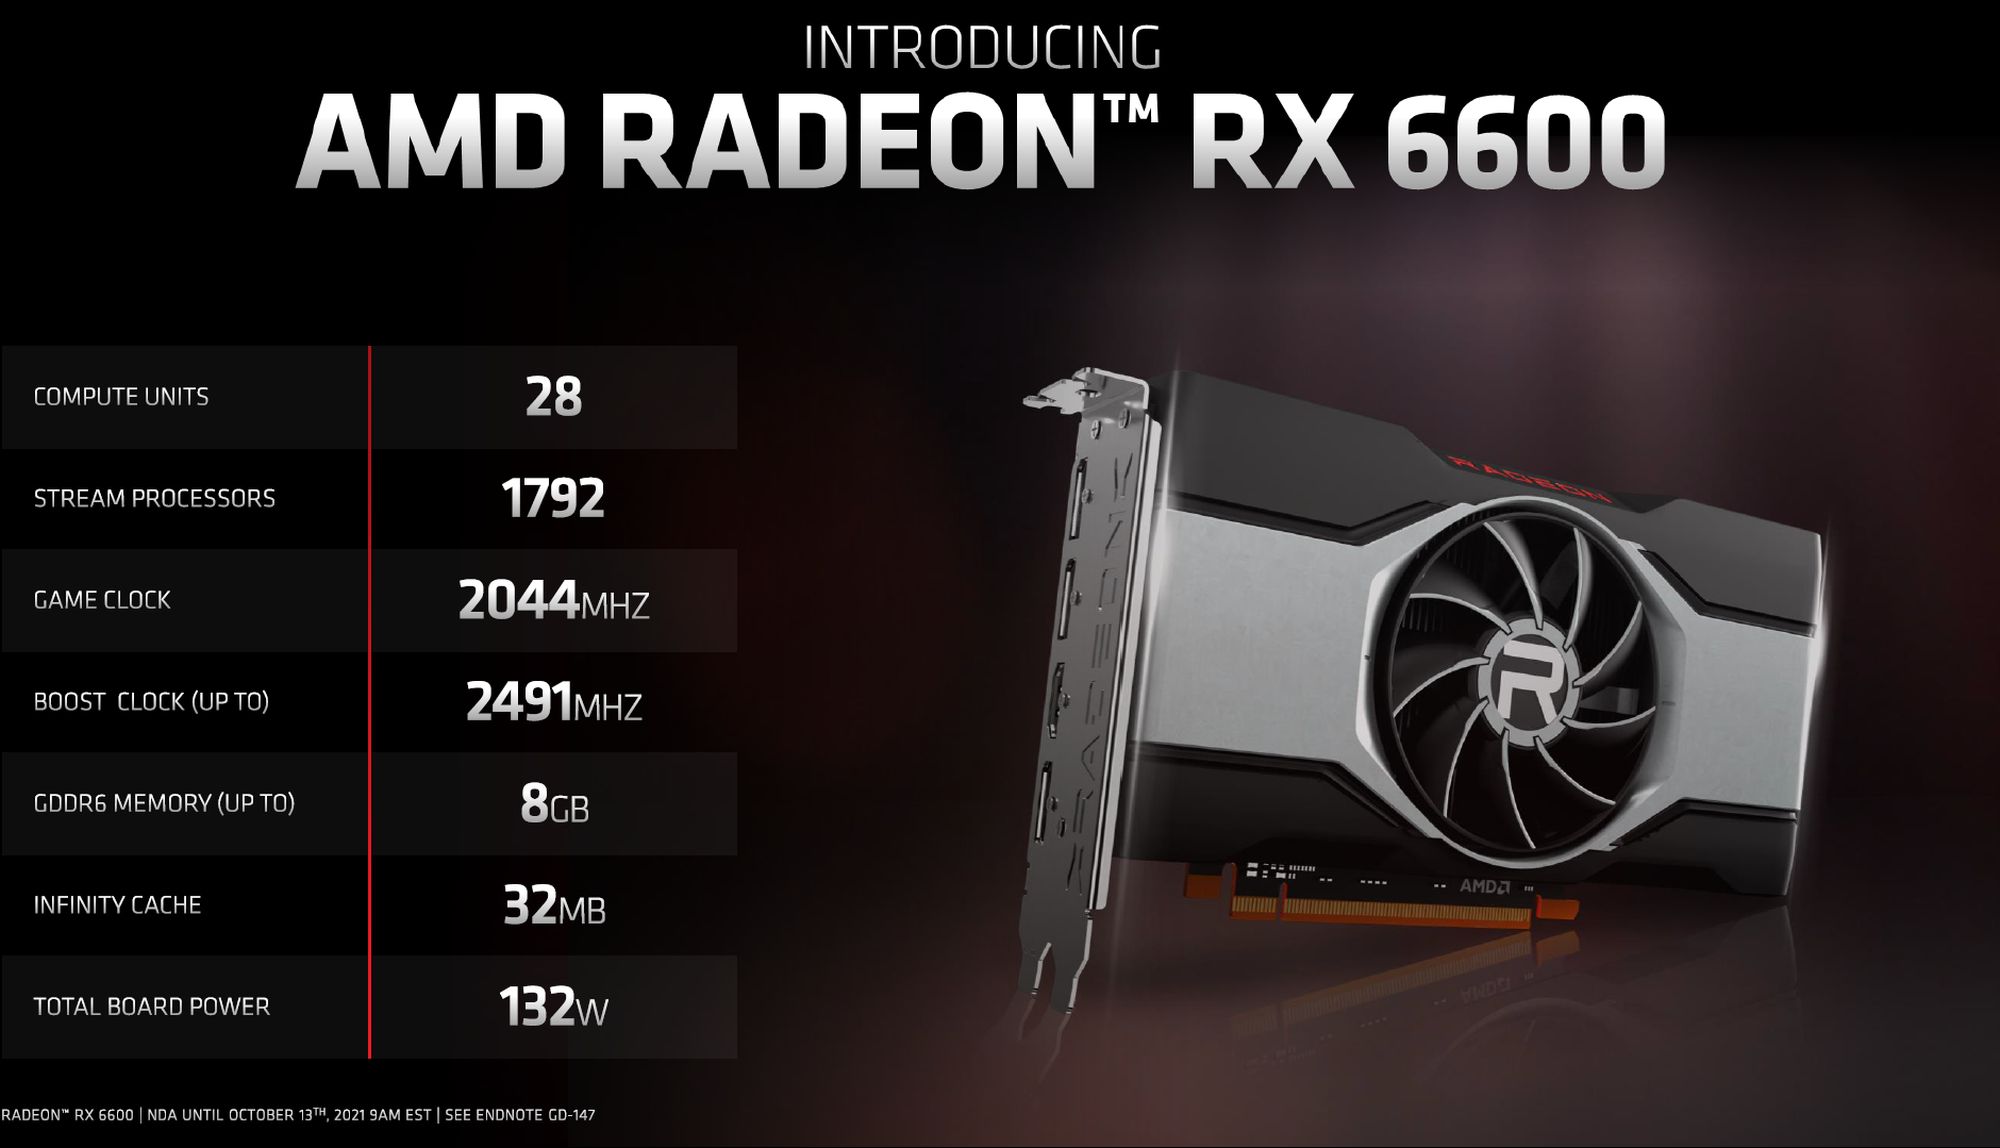 AMD Radeon RX 6600 specs